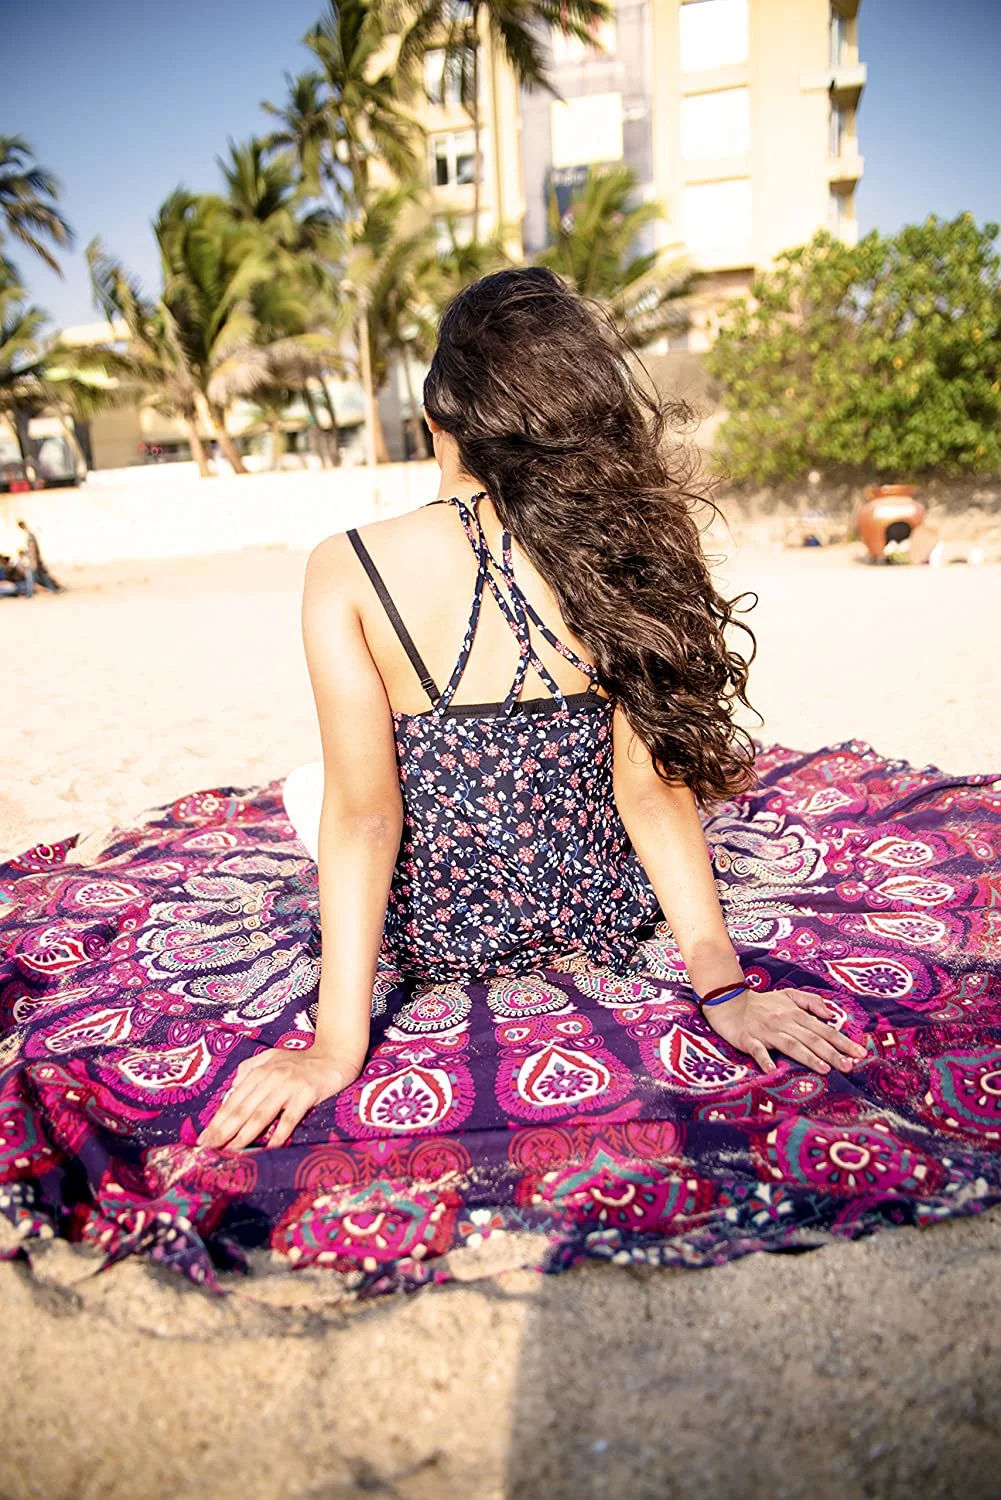 Mandala Tapestry Hippie Indian Blanket Picnic Tablecloth Spread Boho Gypsy Cotton Round Beach Towel